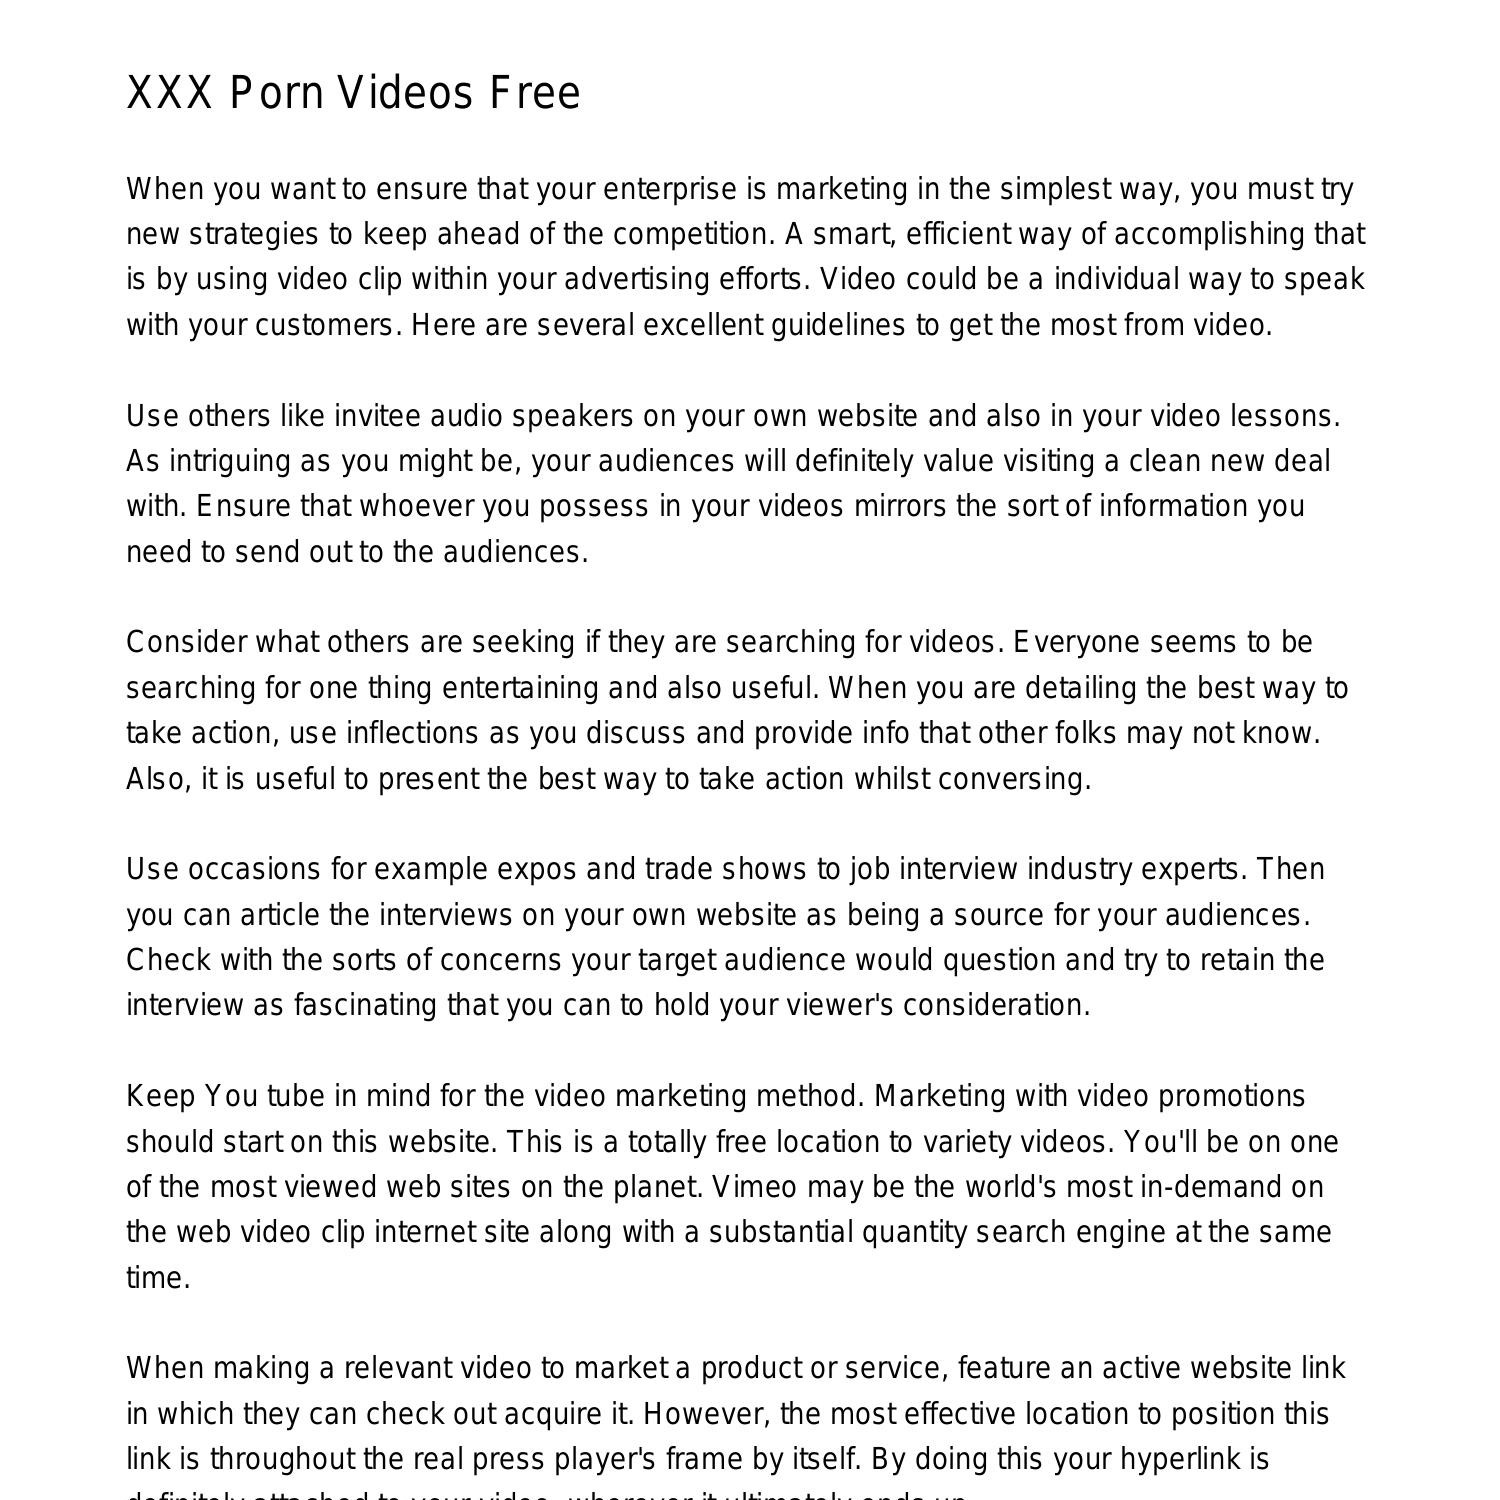 XXX Porn Videos Freecnjwq.pdf.pdf | DocDroid